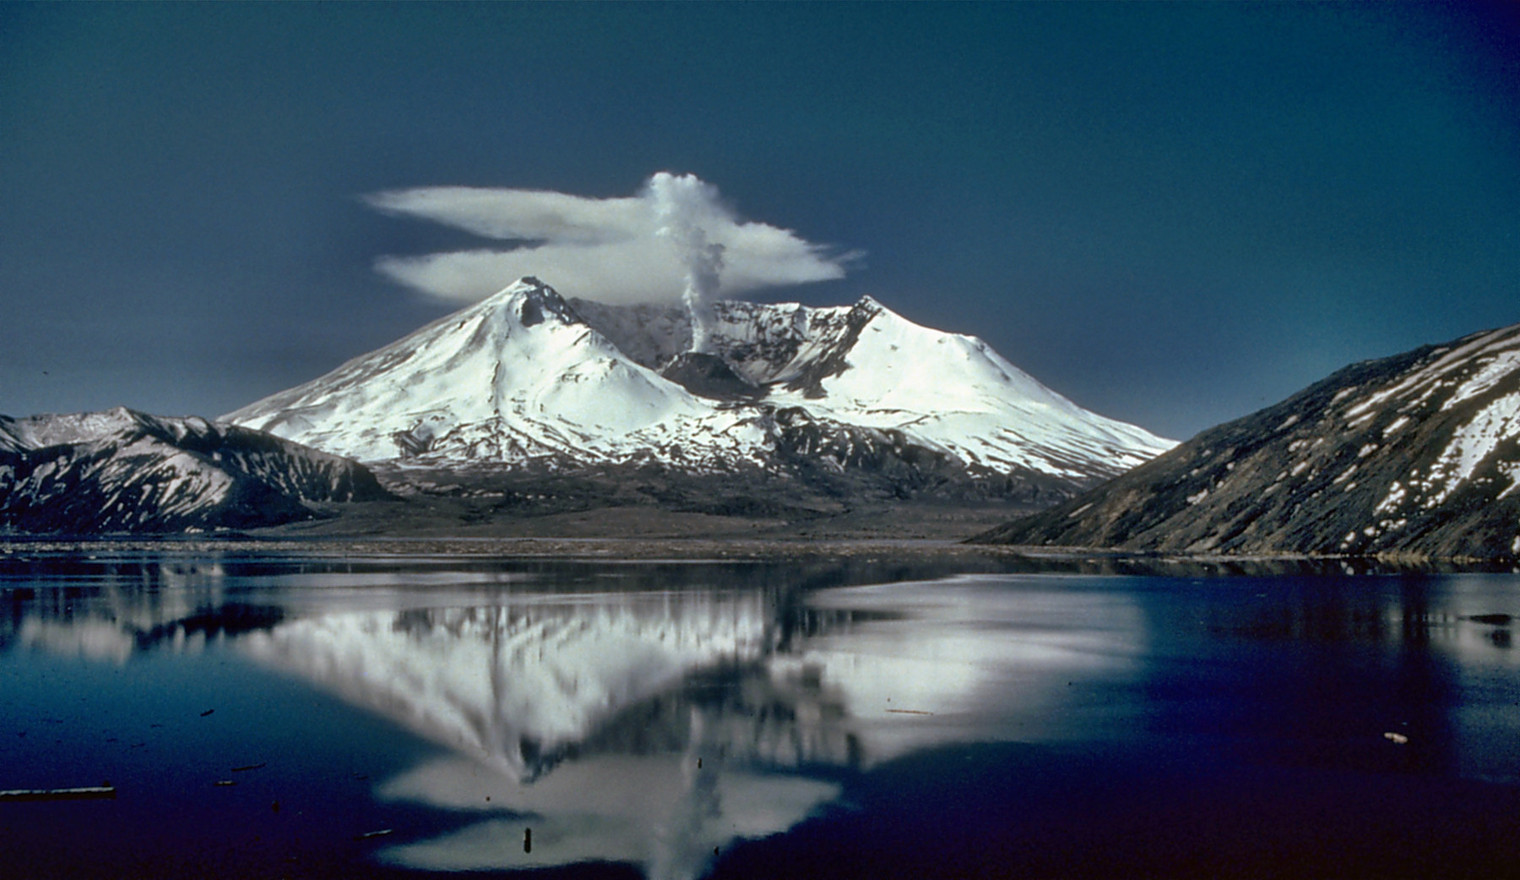 Mount St. Helens after